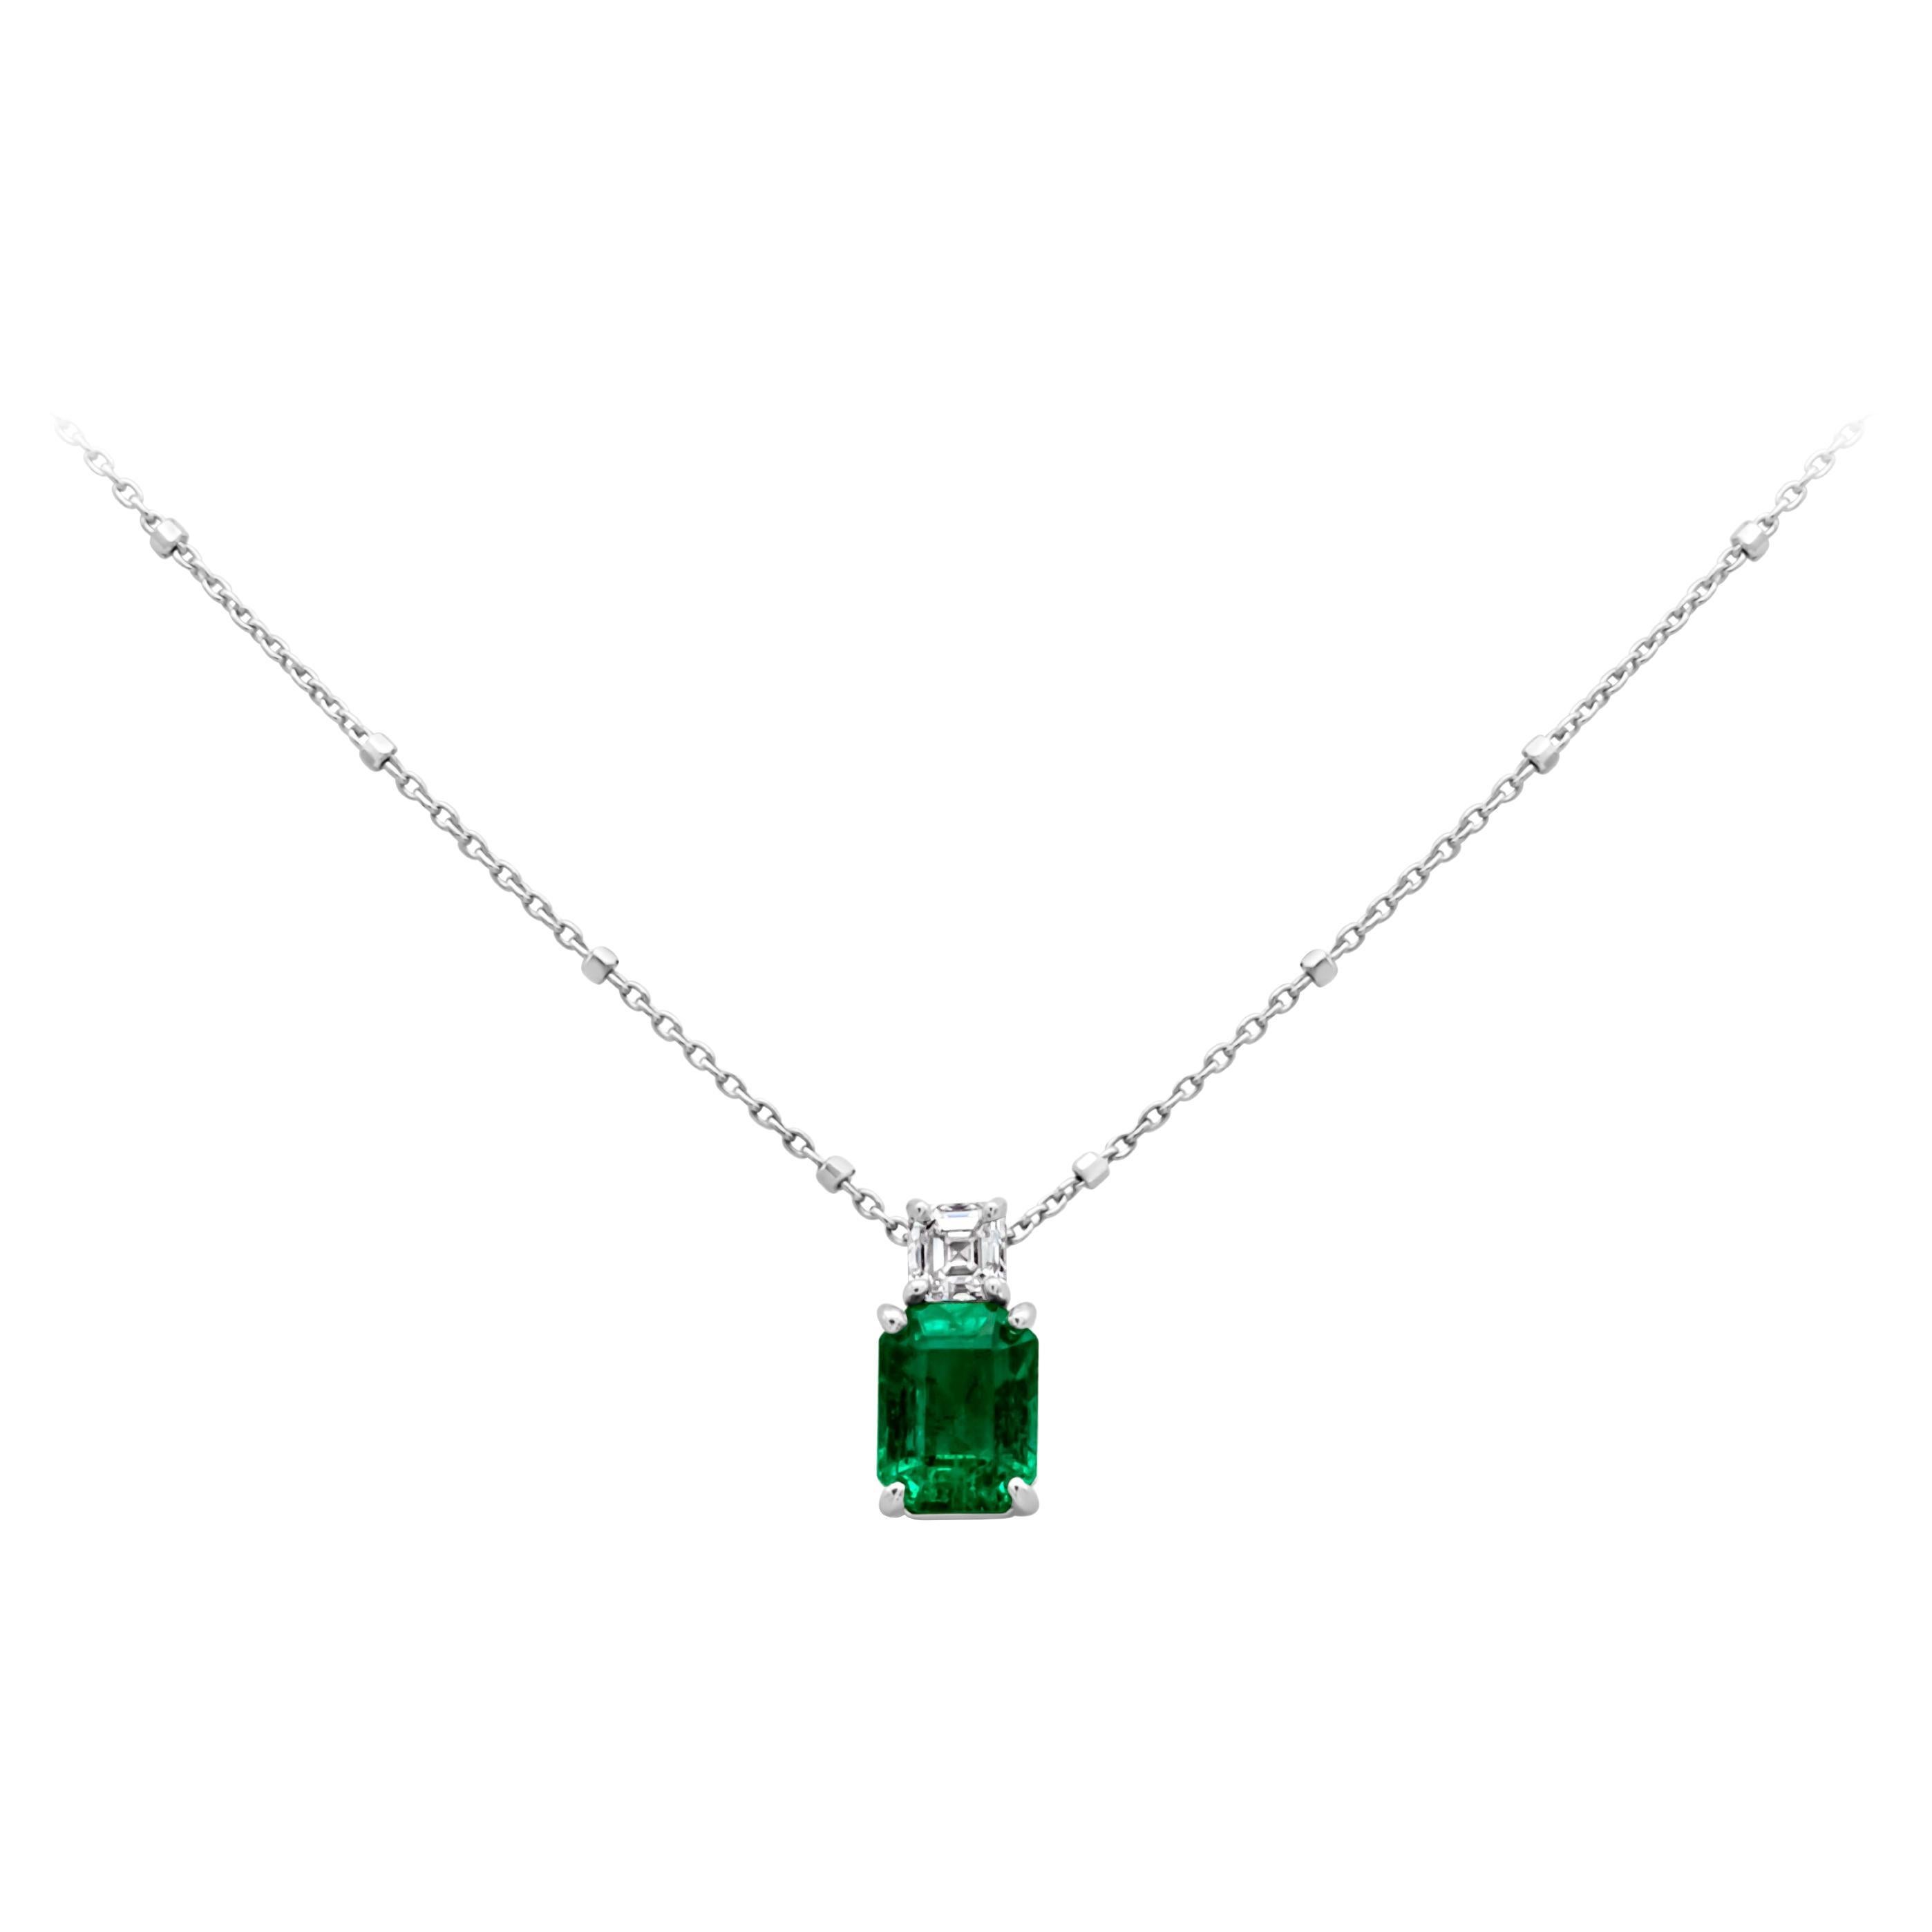 Roman Malakov 1.27 Carat Emerald Cut Green Emerald and Diamond Pendant Necklace